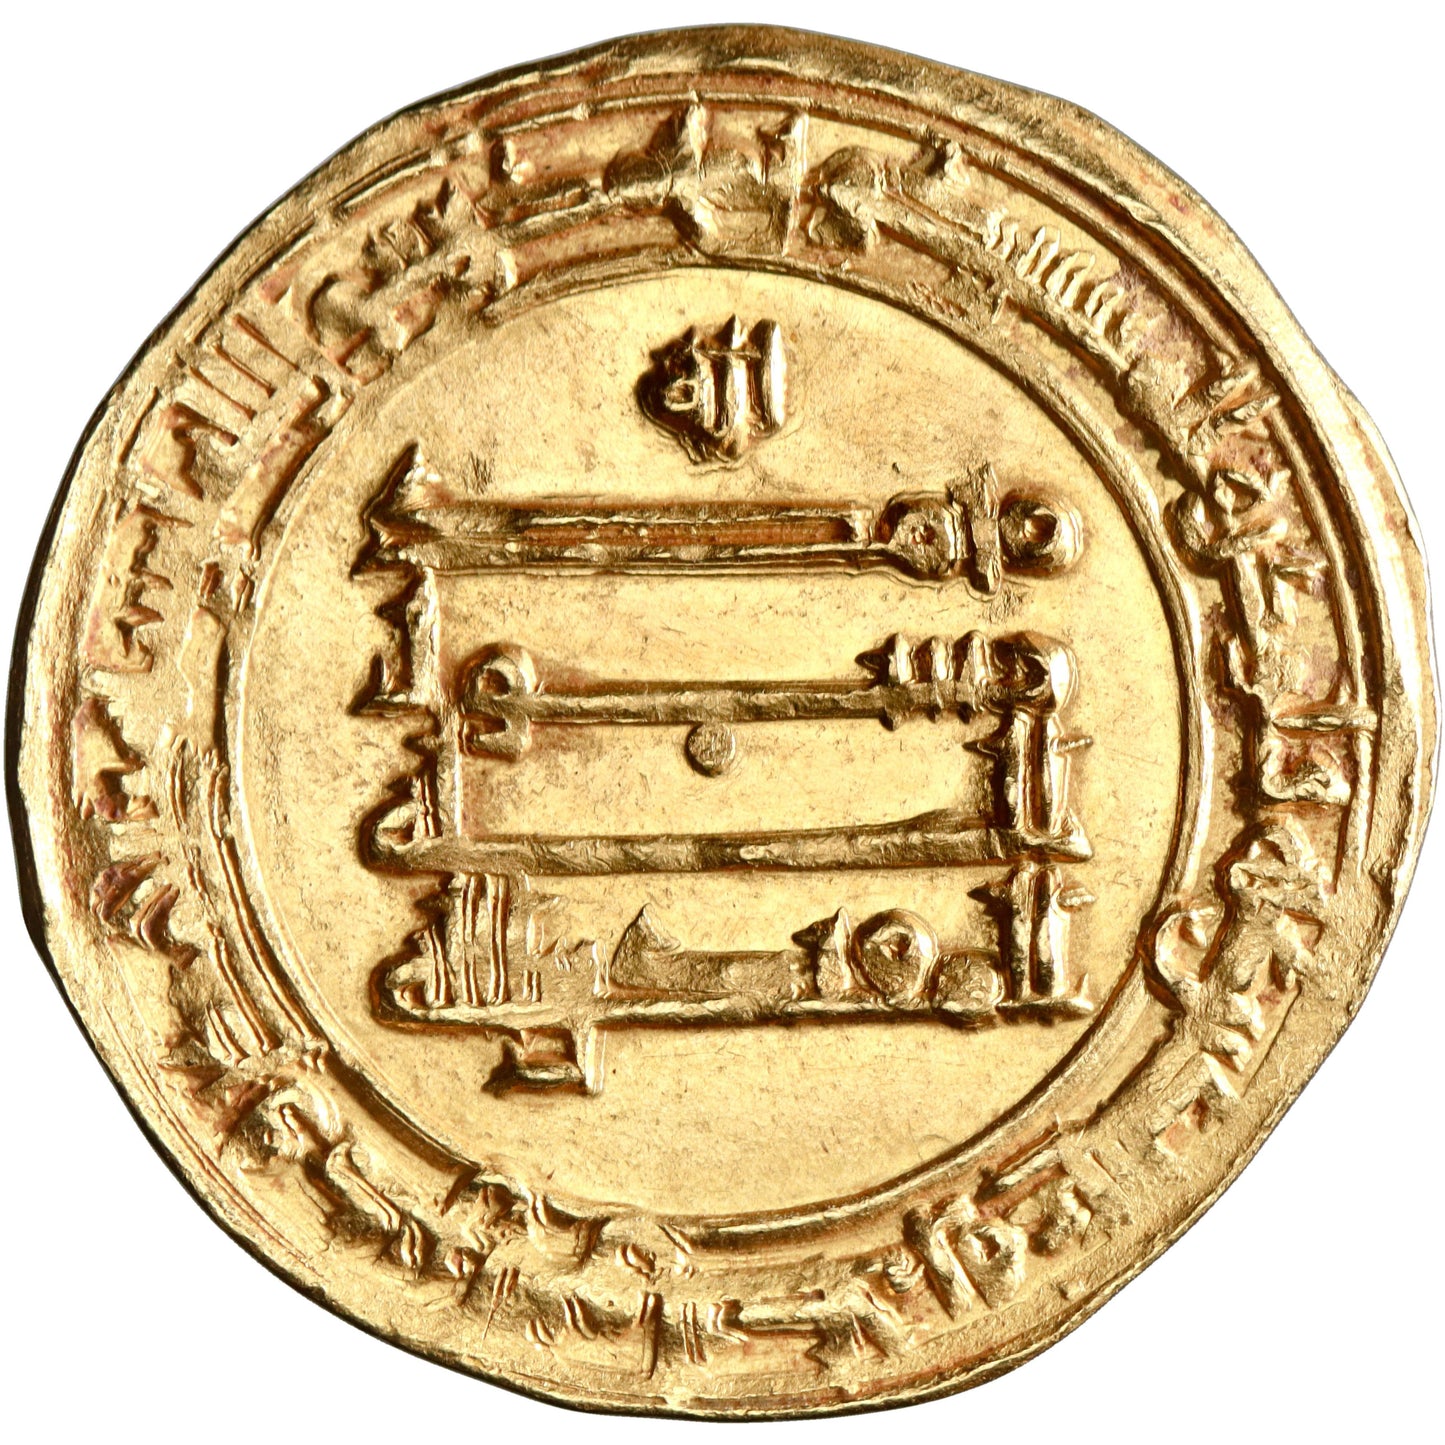 Abbasid, al-Muqtadir, gold dinar, Madinat al-Salam (Baghdad) mint, AH 312, citing Abu al-'Abbas